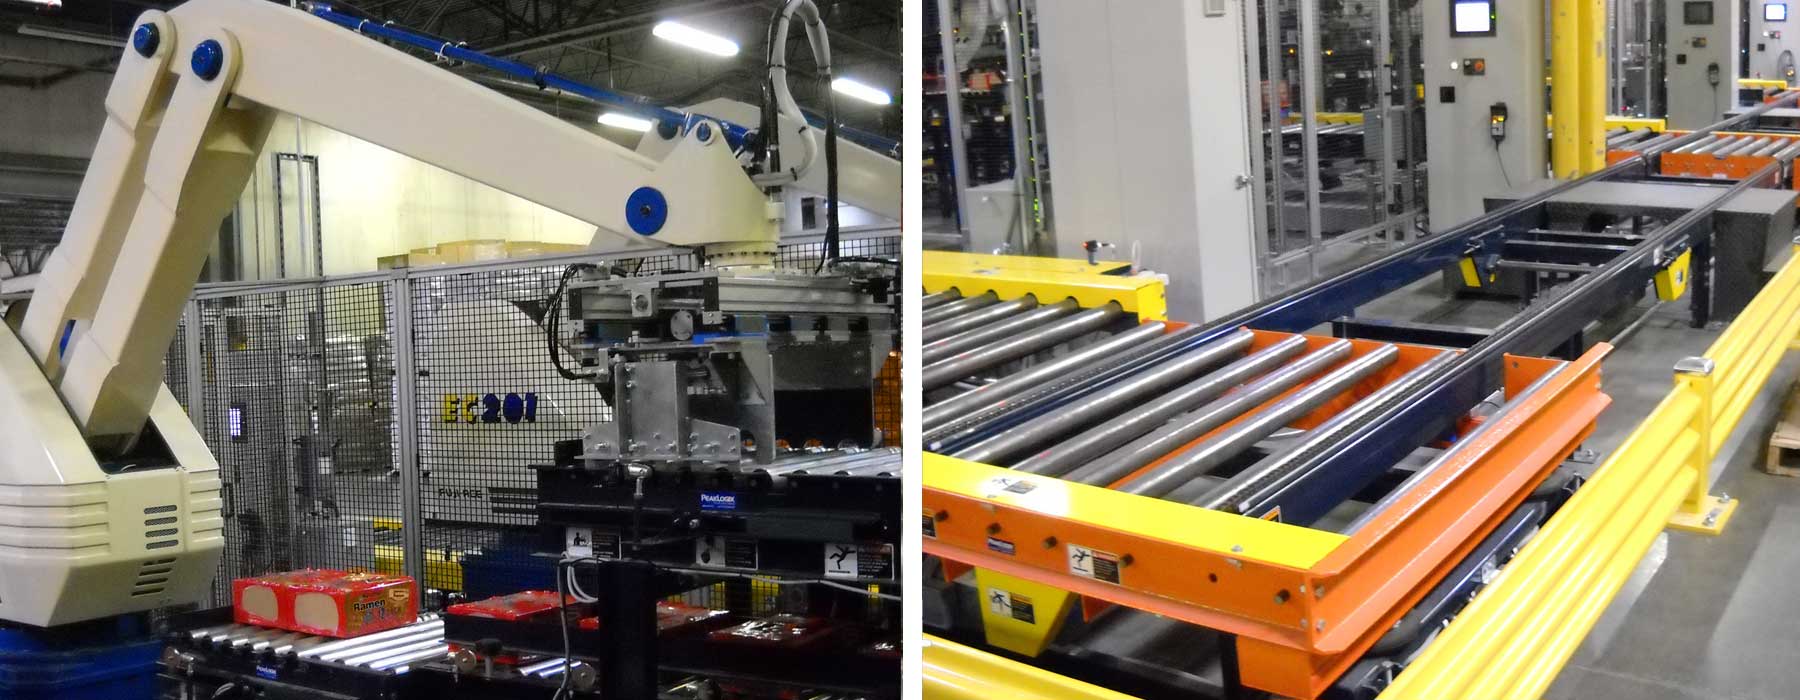 robotic palletizer and conveyor